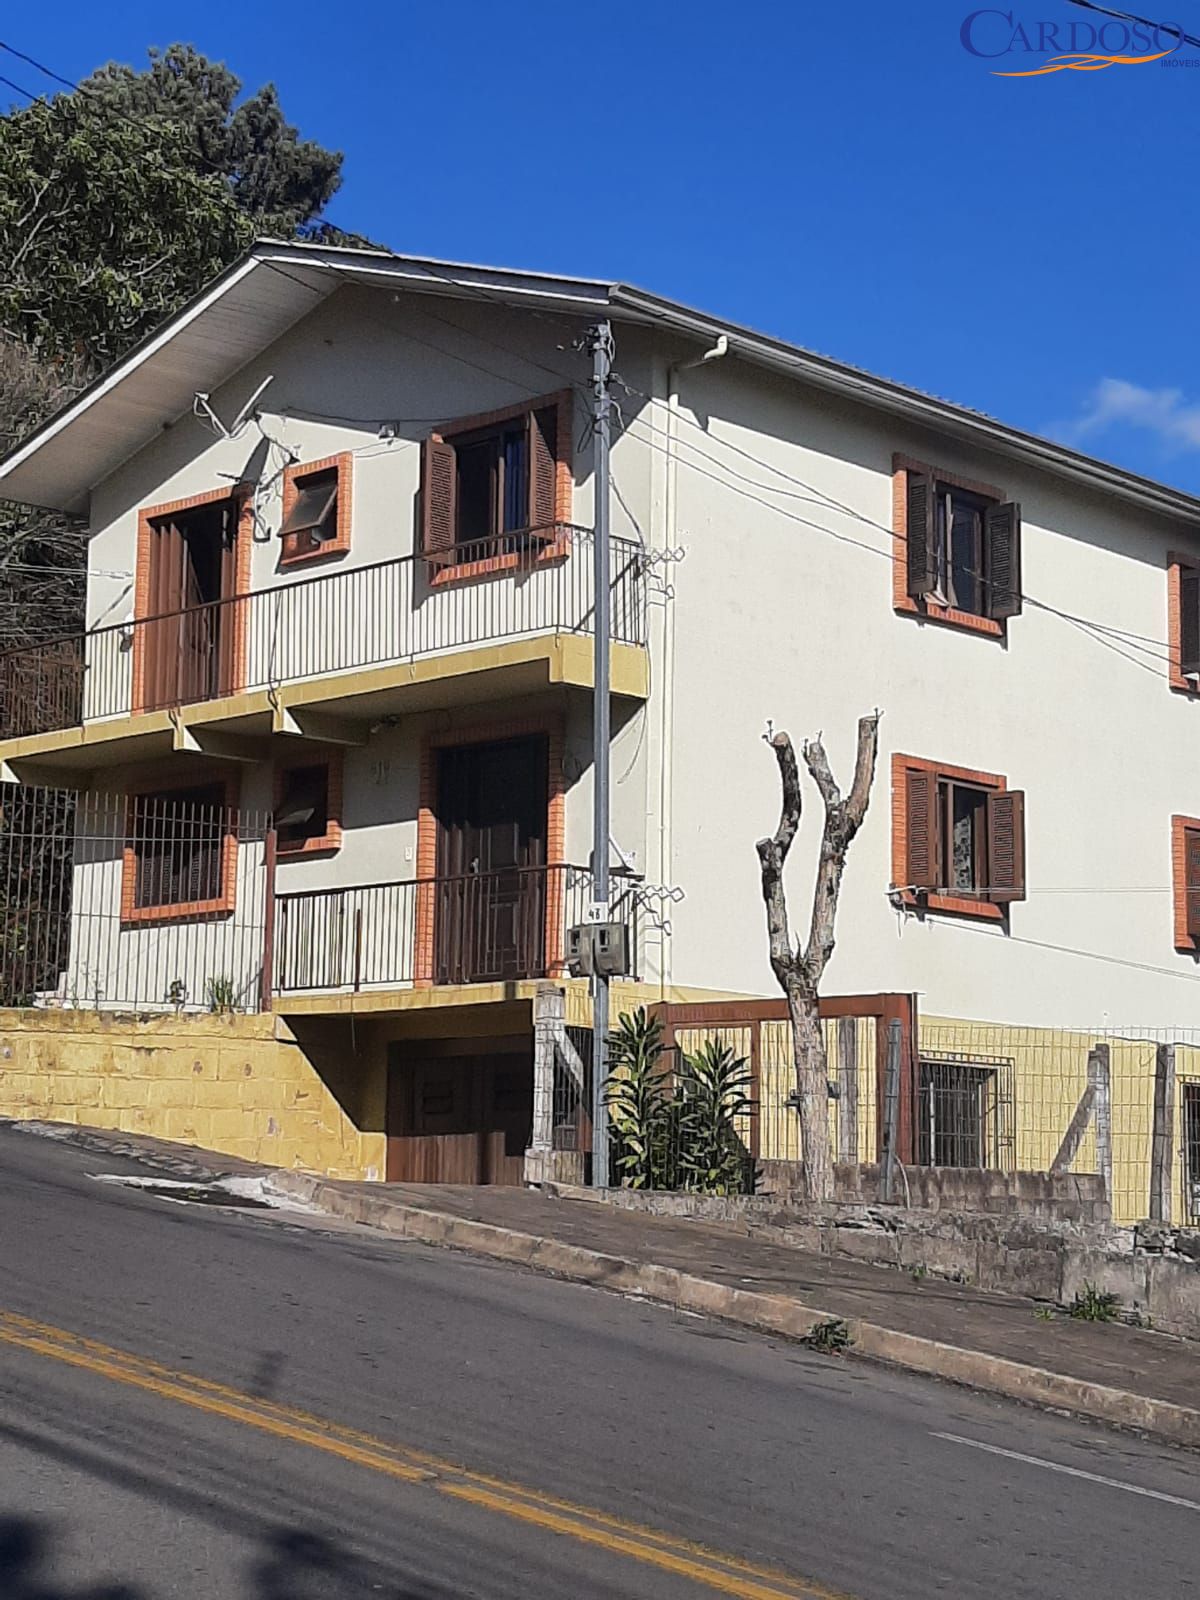 Prdio comercial/residencial  venda  no Esplanada - Caxias do Sul, RS. Imveis